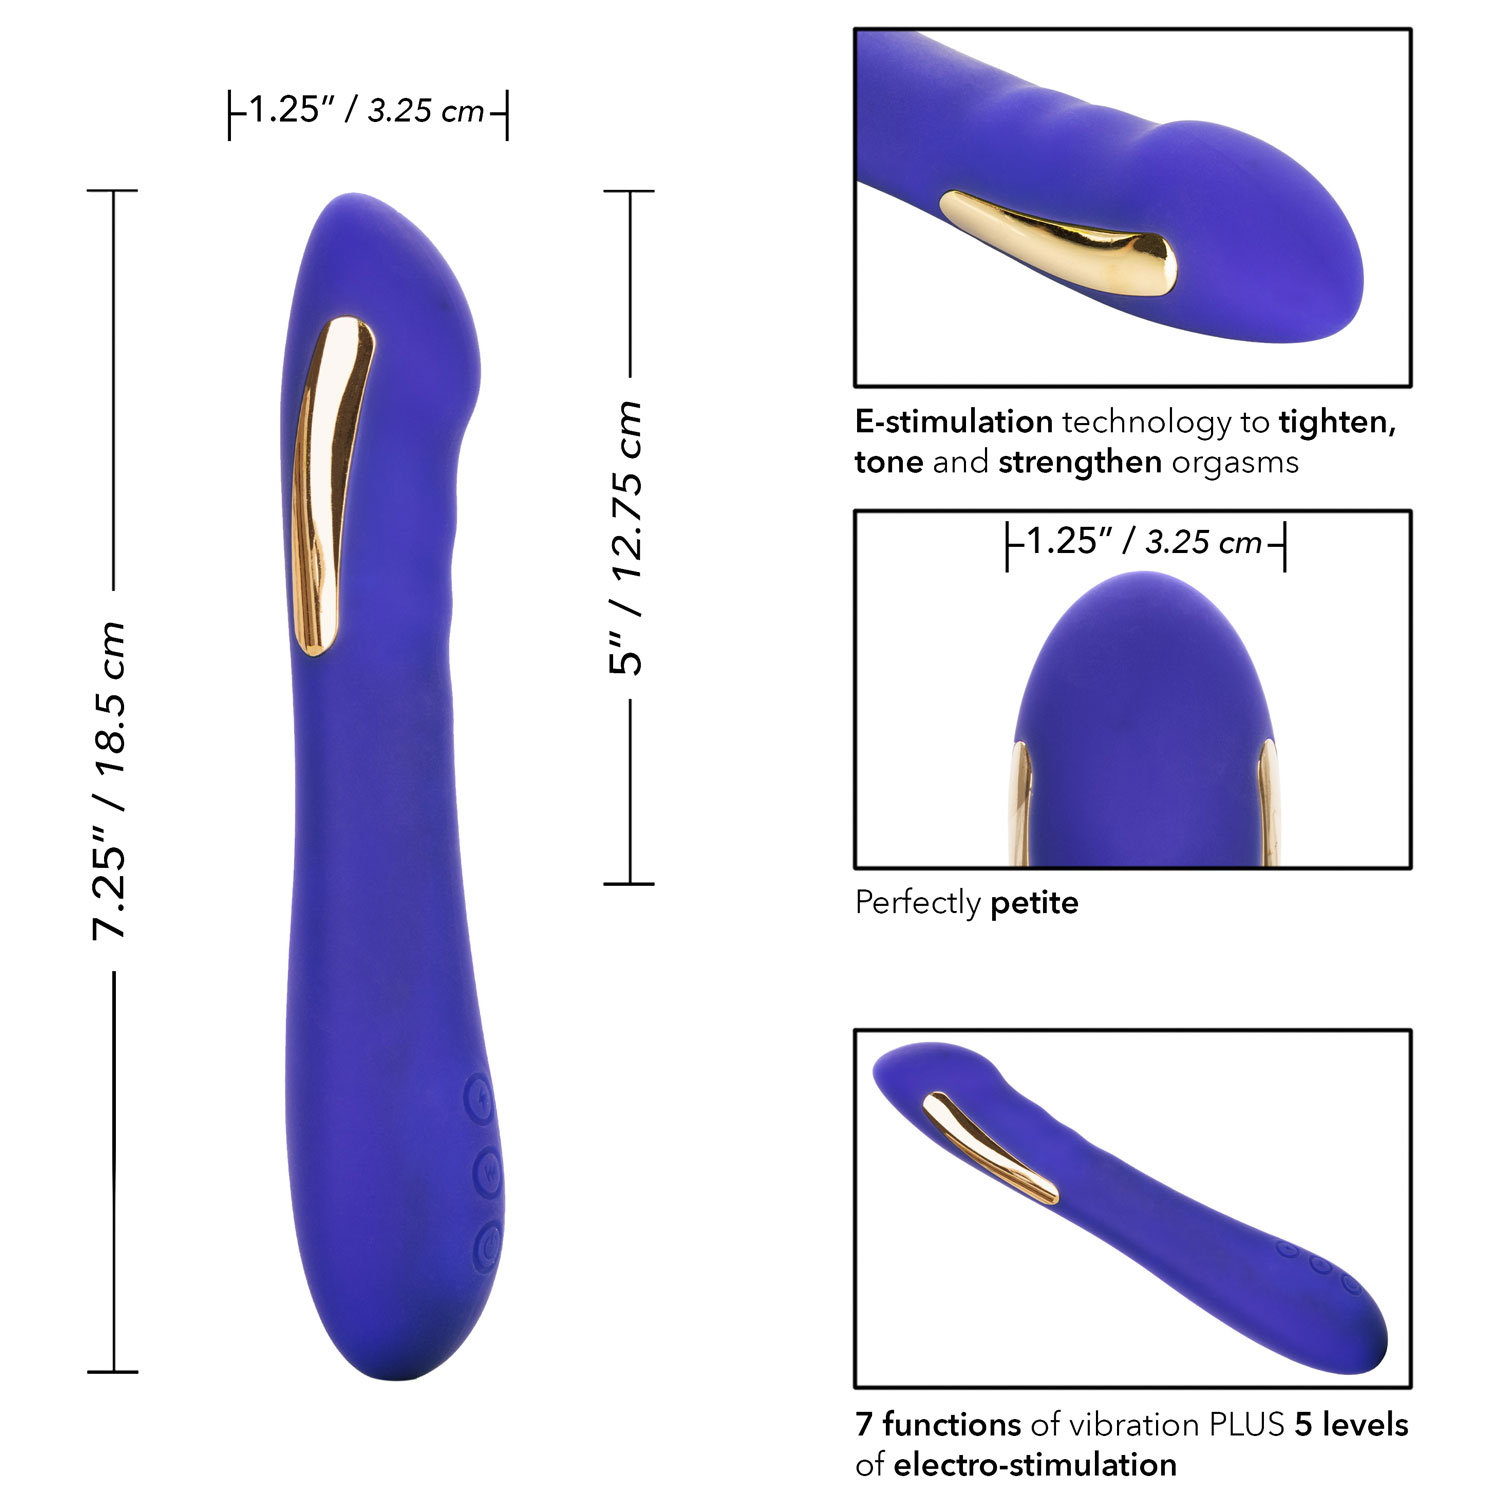 Impulse Intimate E-Stimulator Petite Wand Vibrator by CalExotics - Measurements